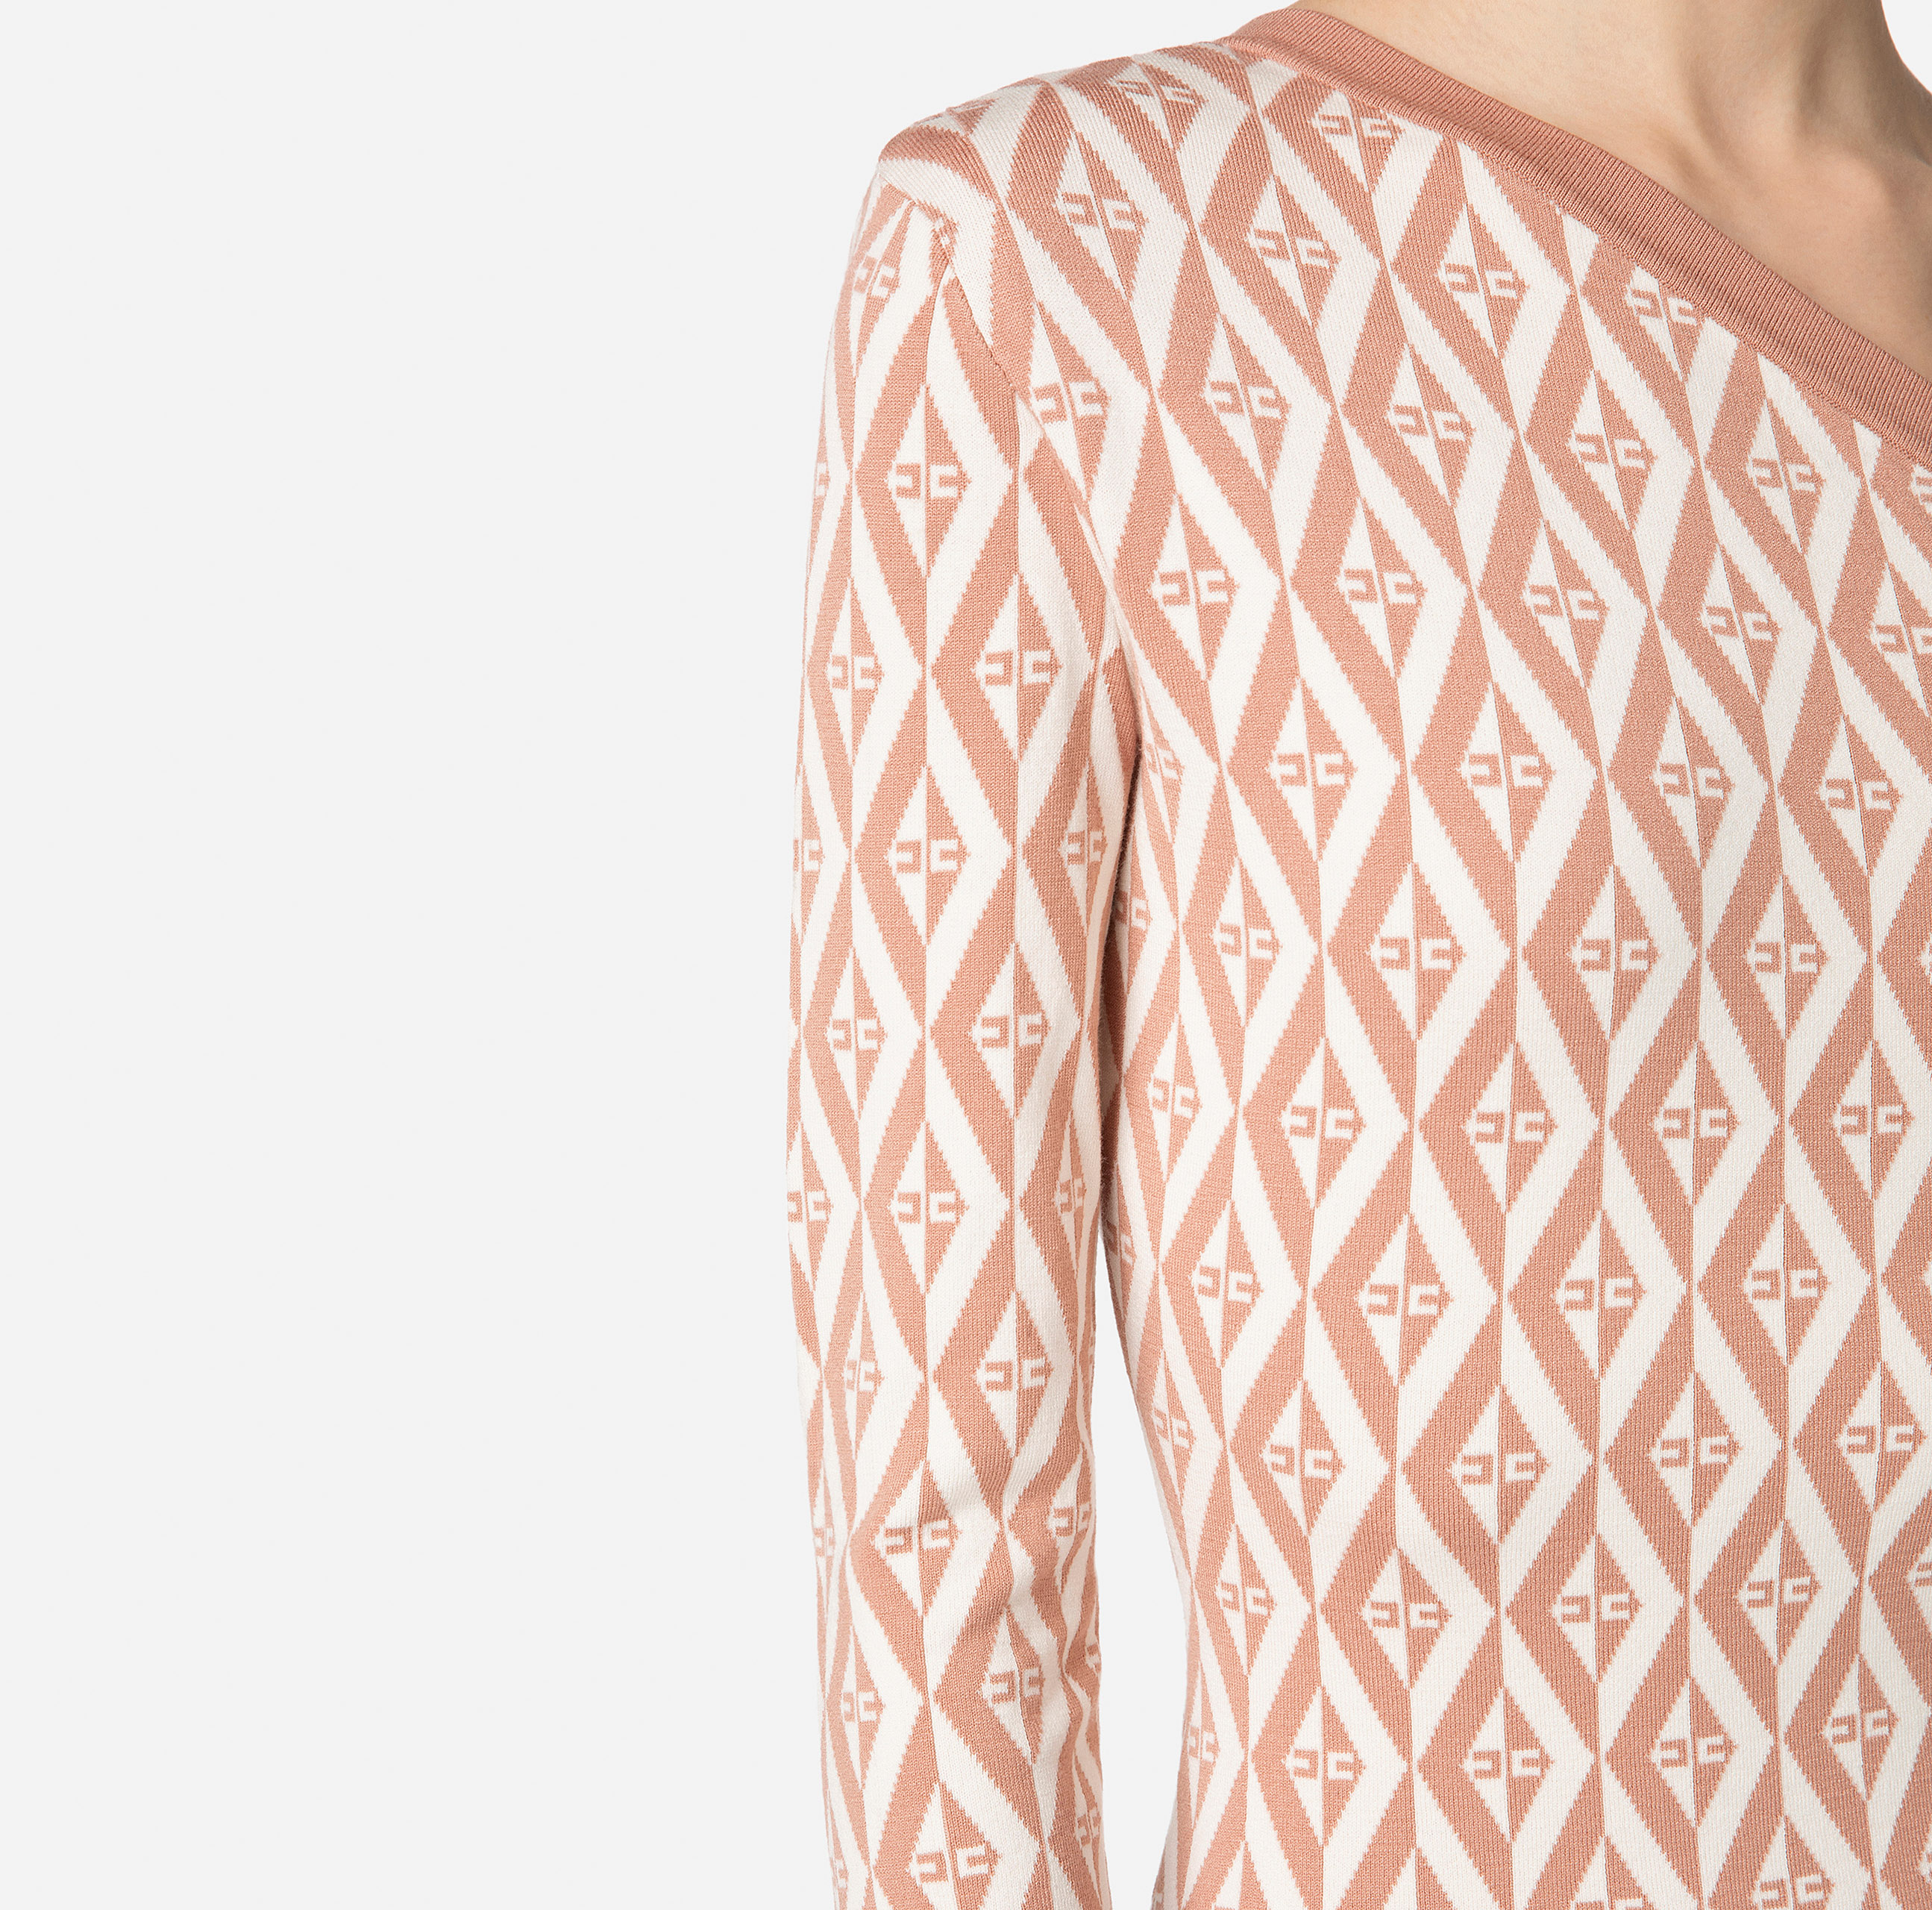 One-shoulder calf-length knit dress with diamond pattern - Elisabetta Franchi